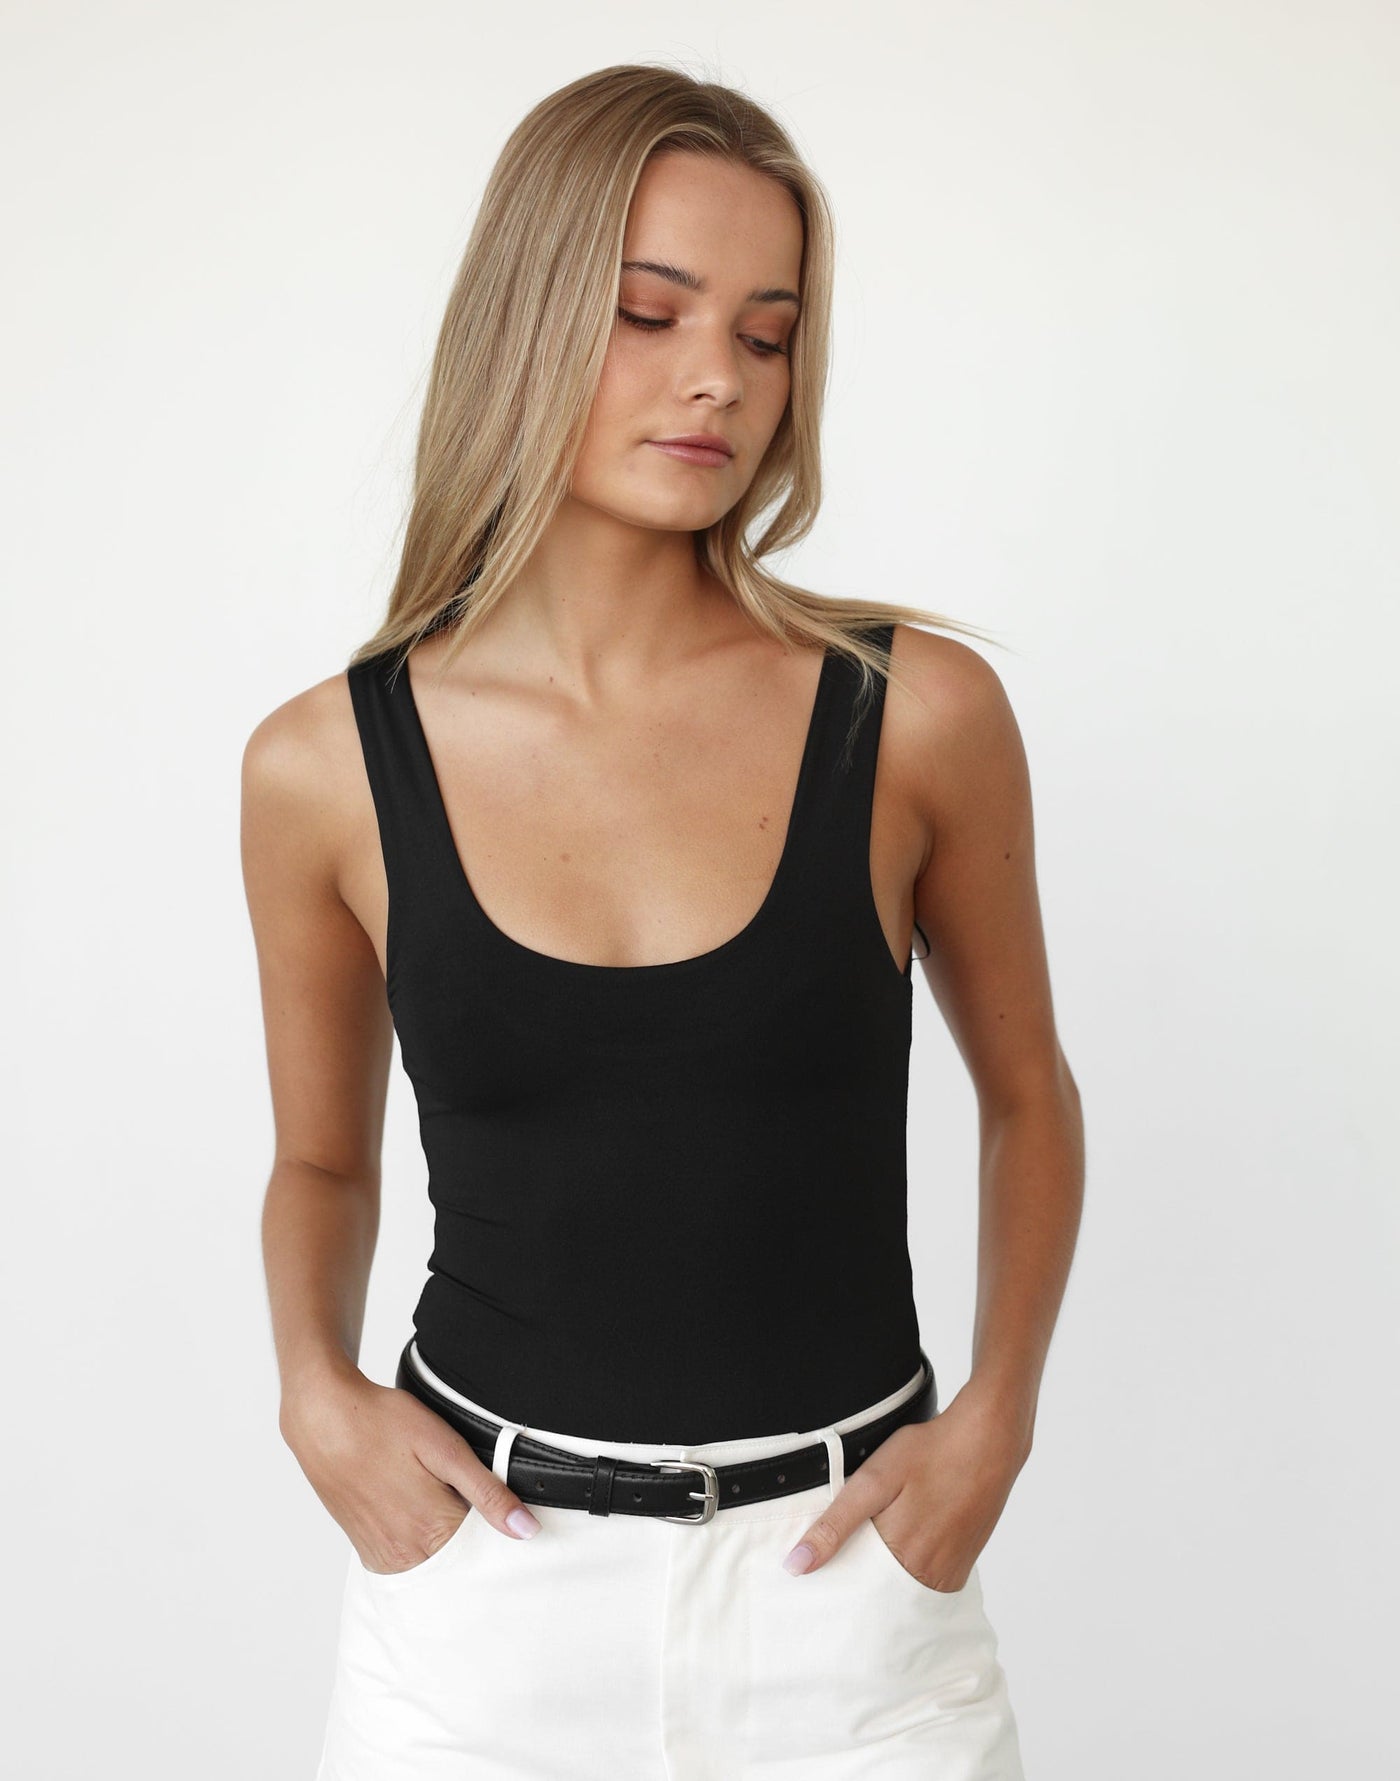 Levitate Bodysuit (Black) - Low Back Scoop Neck Sleeveless Bodysuit - Women's Top - Charcoal Clothing